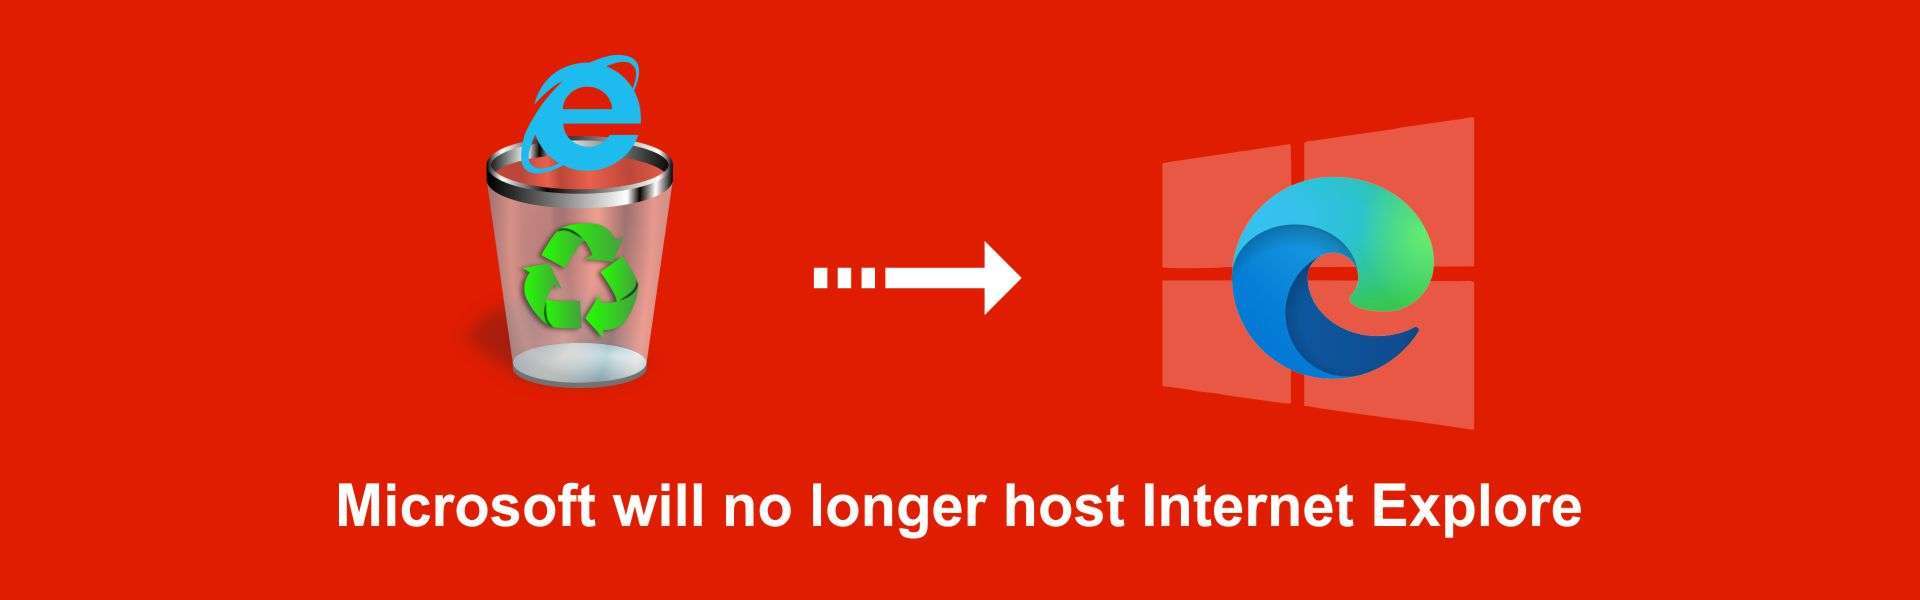 Microsoft will no longer host Internet Explore